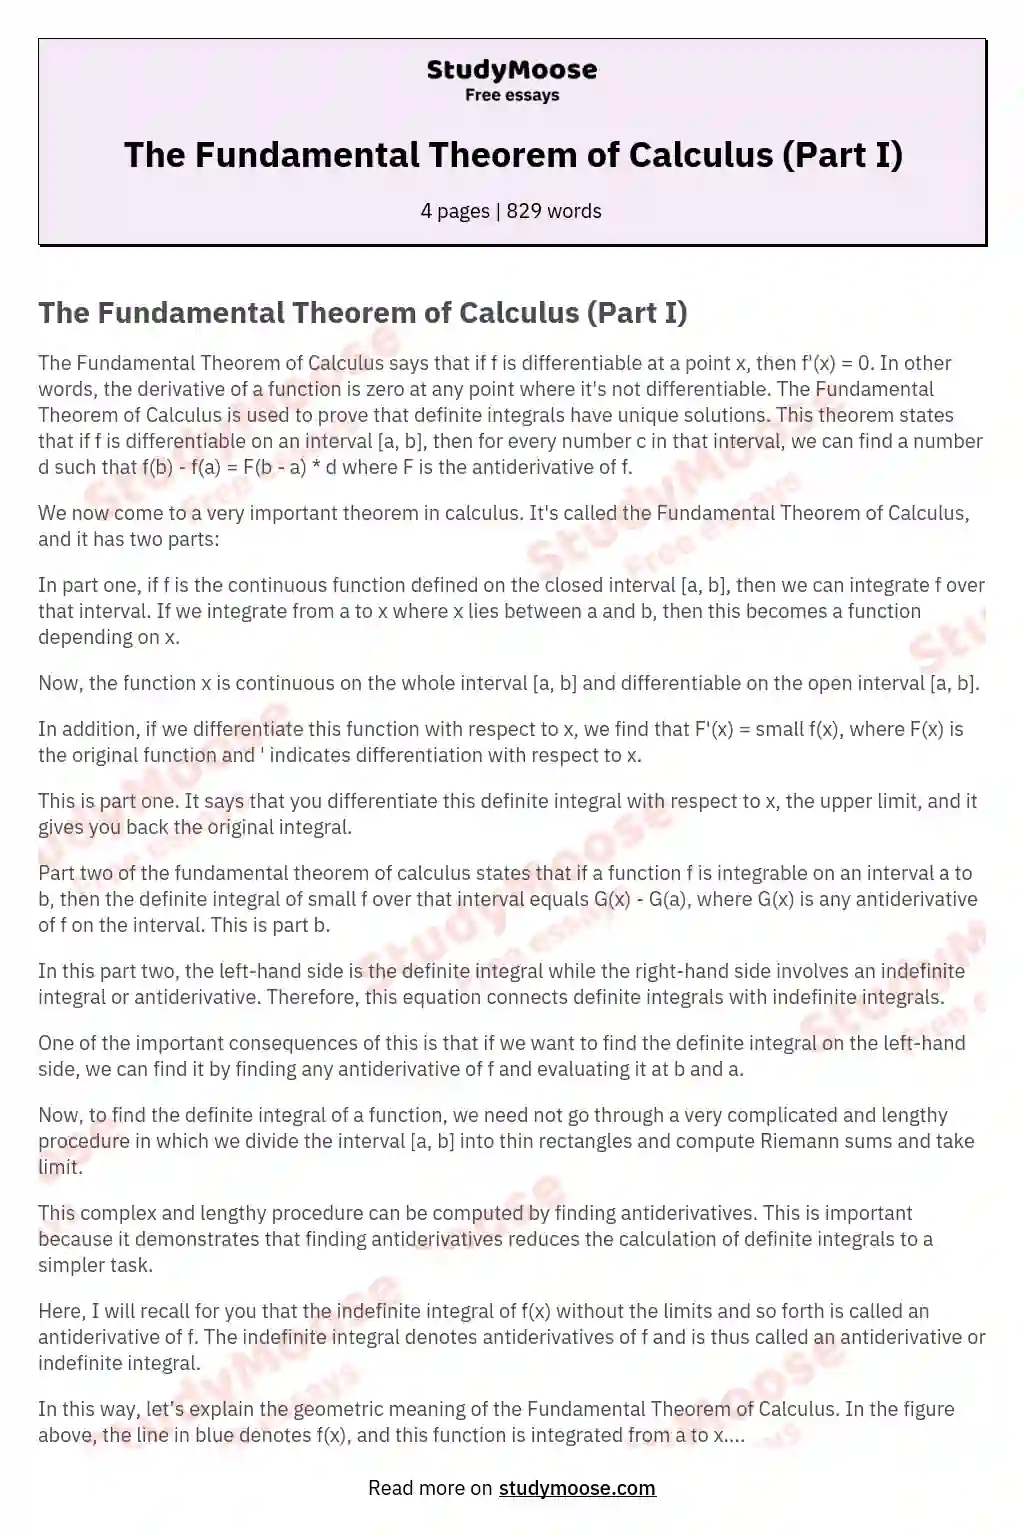 The Fundamental Theorem of Calculus (Part I) essay